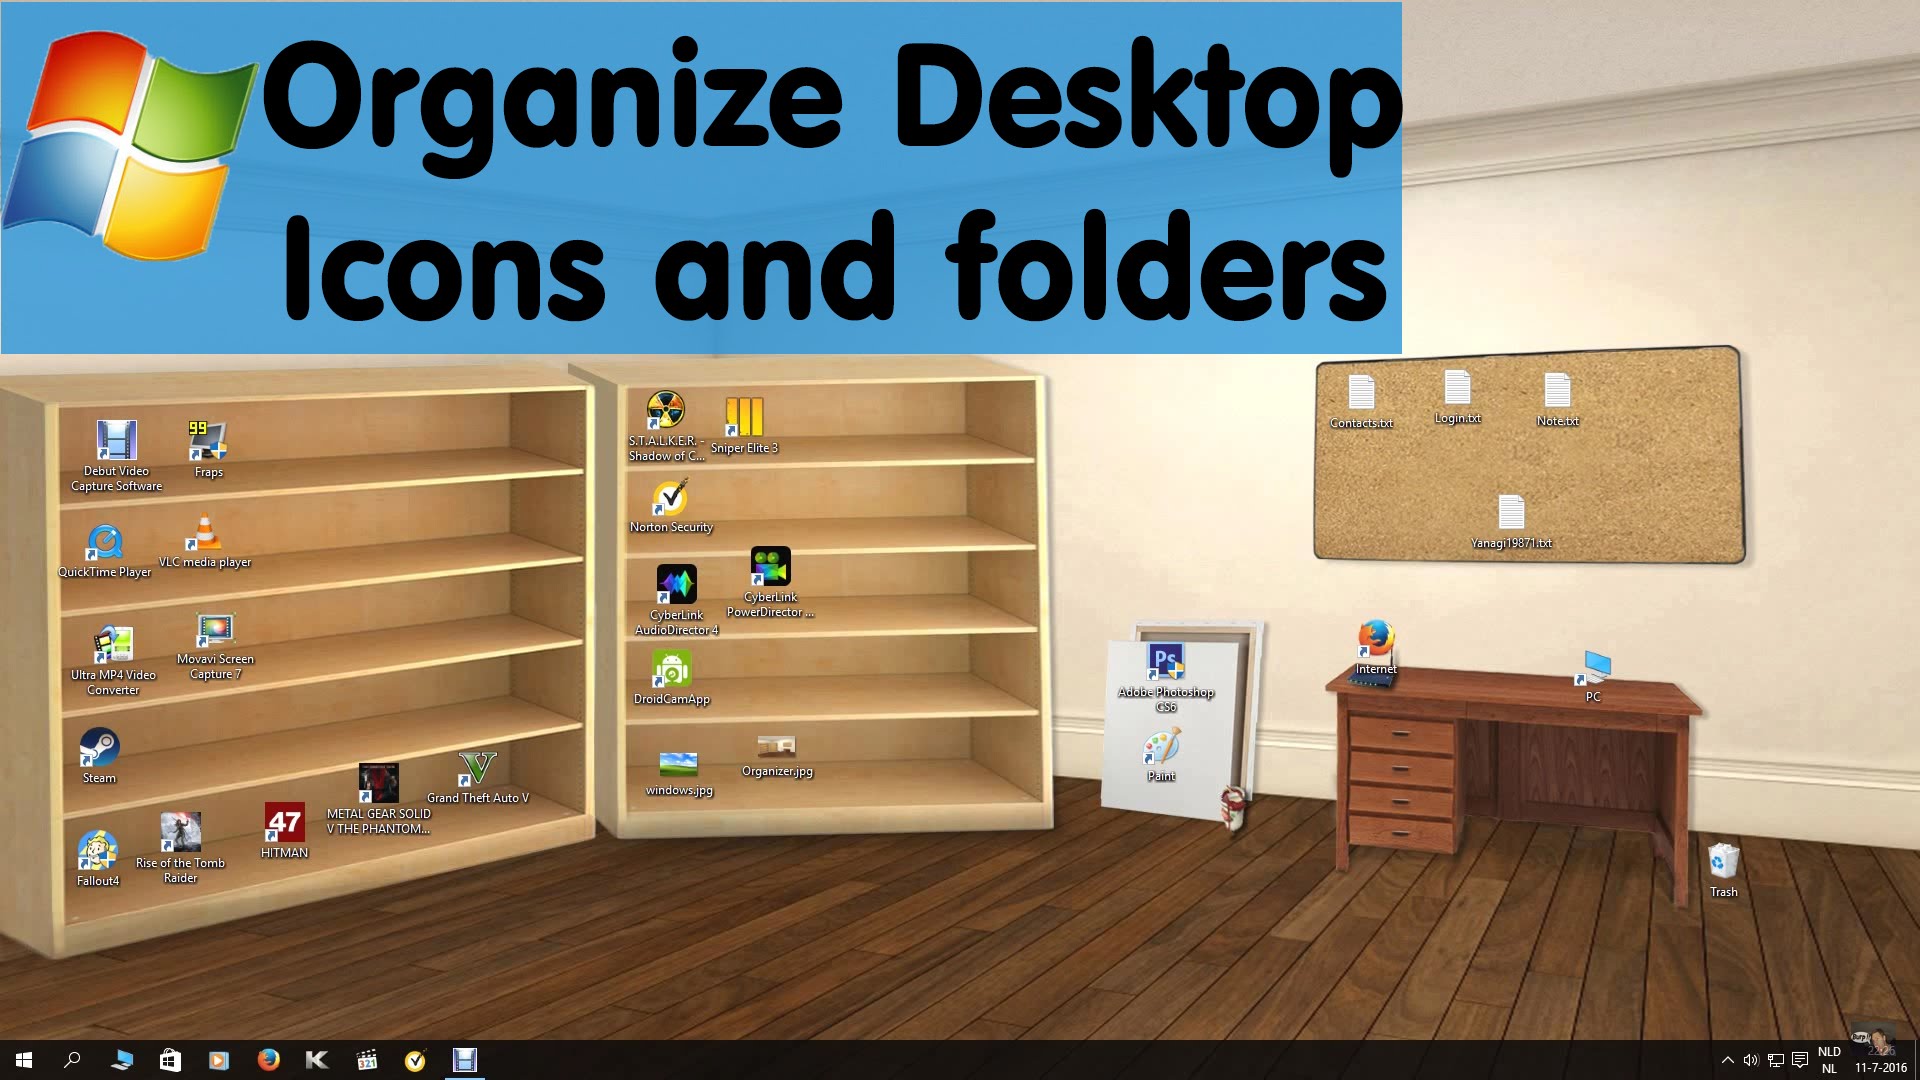 Best Windows 10 Desktop Organizer Wallpaper Ever - YouTube